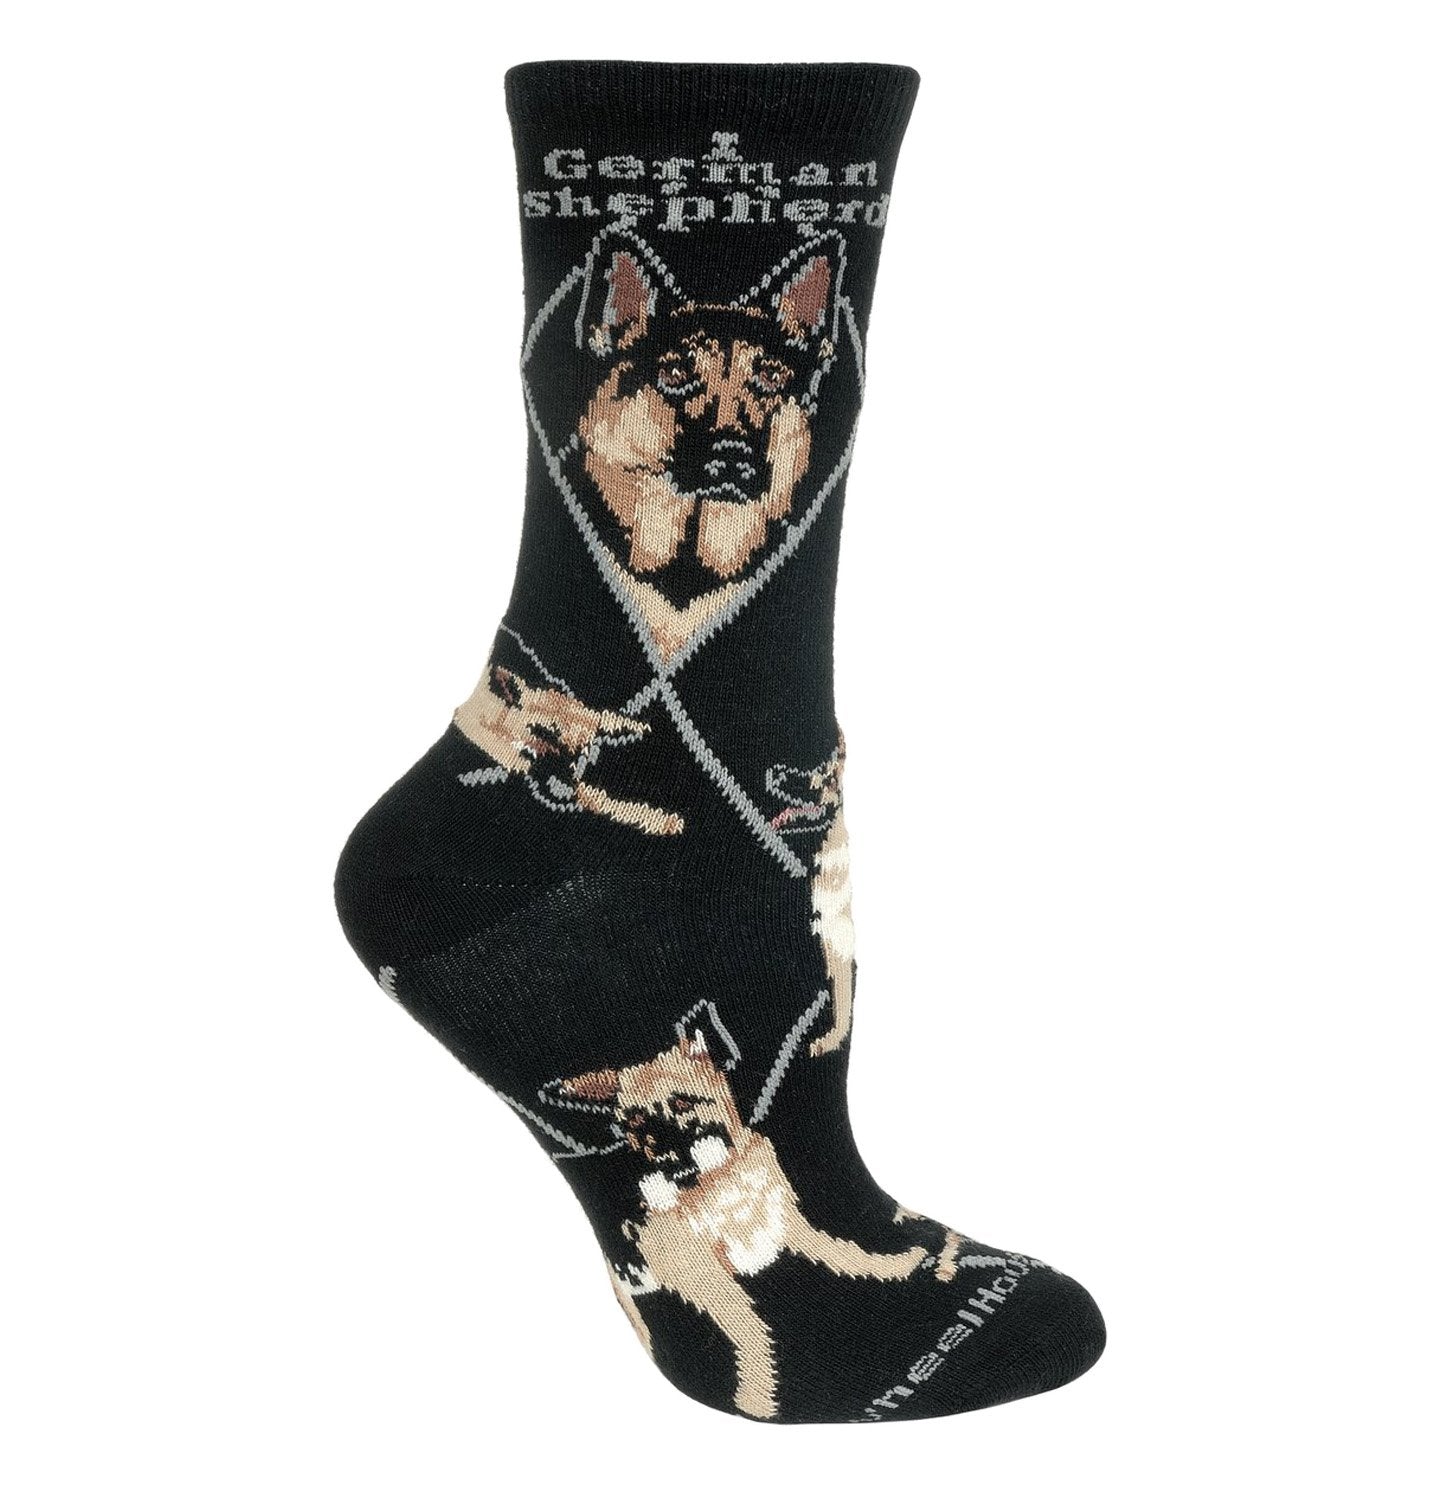 Animal Pride - German Shepherd on Black - Adult Cotton Crew Socks